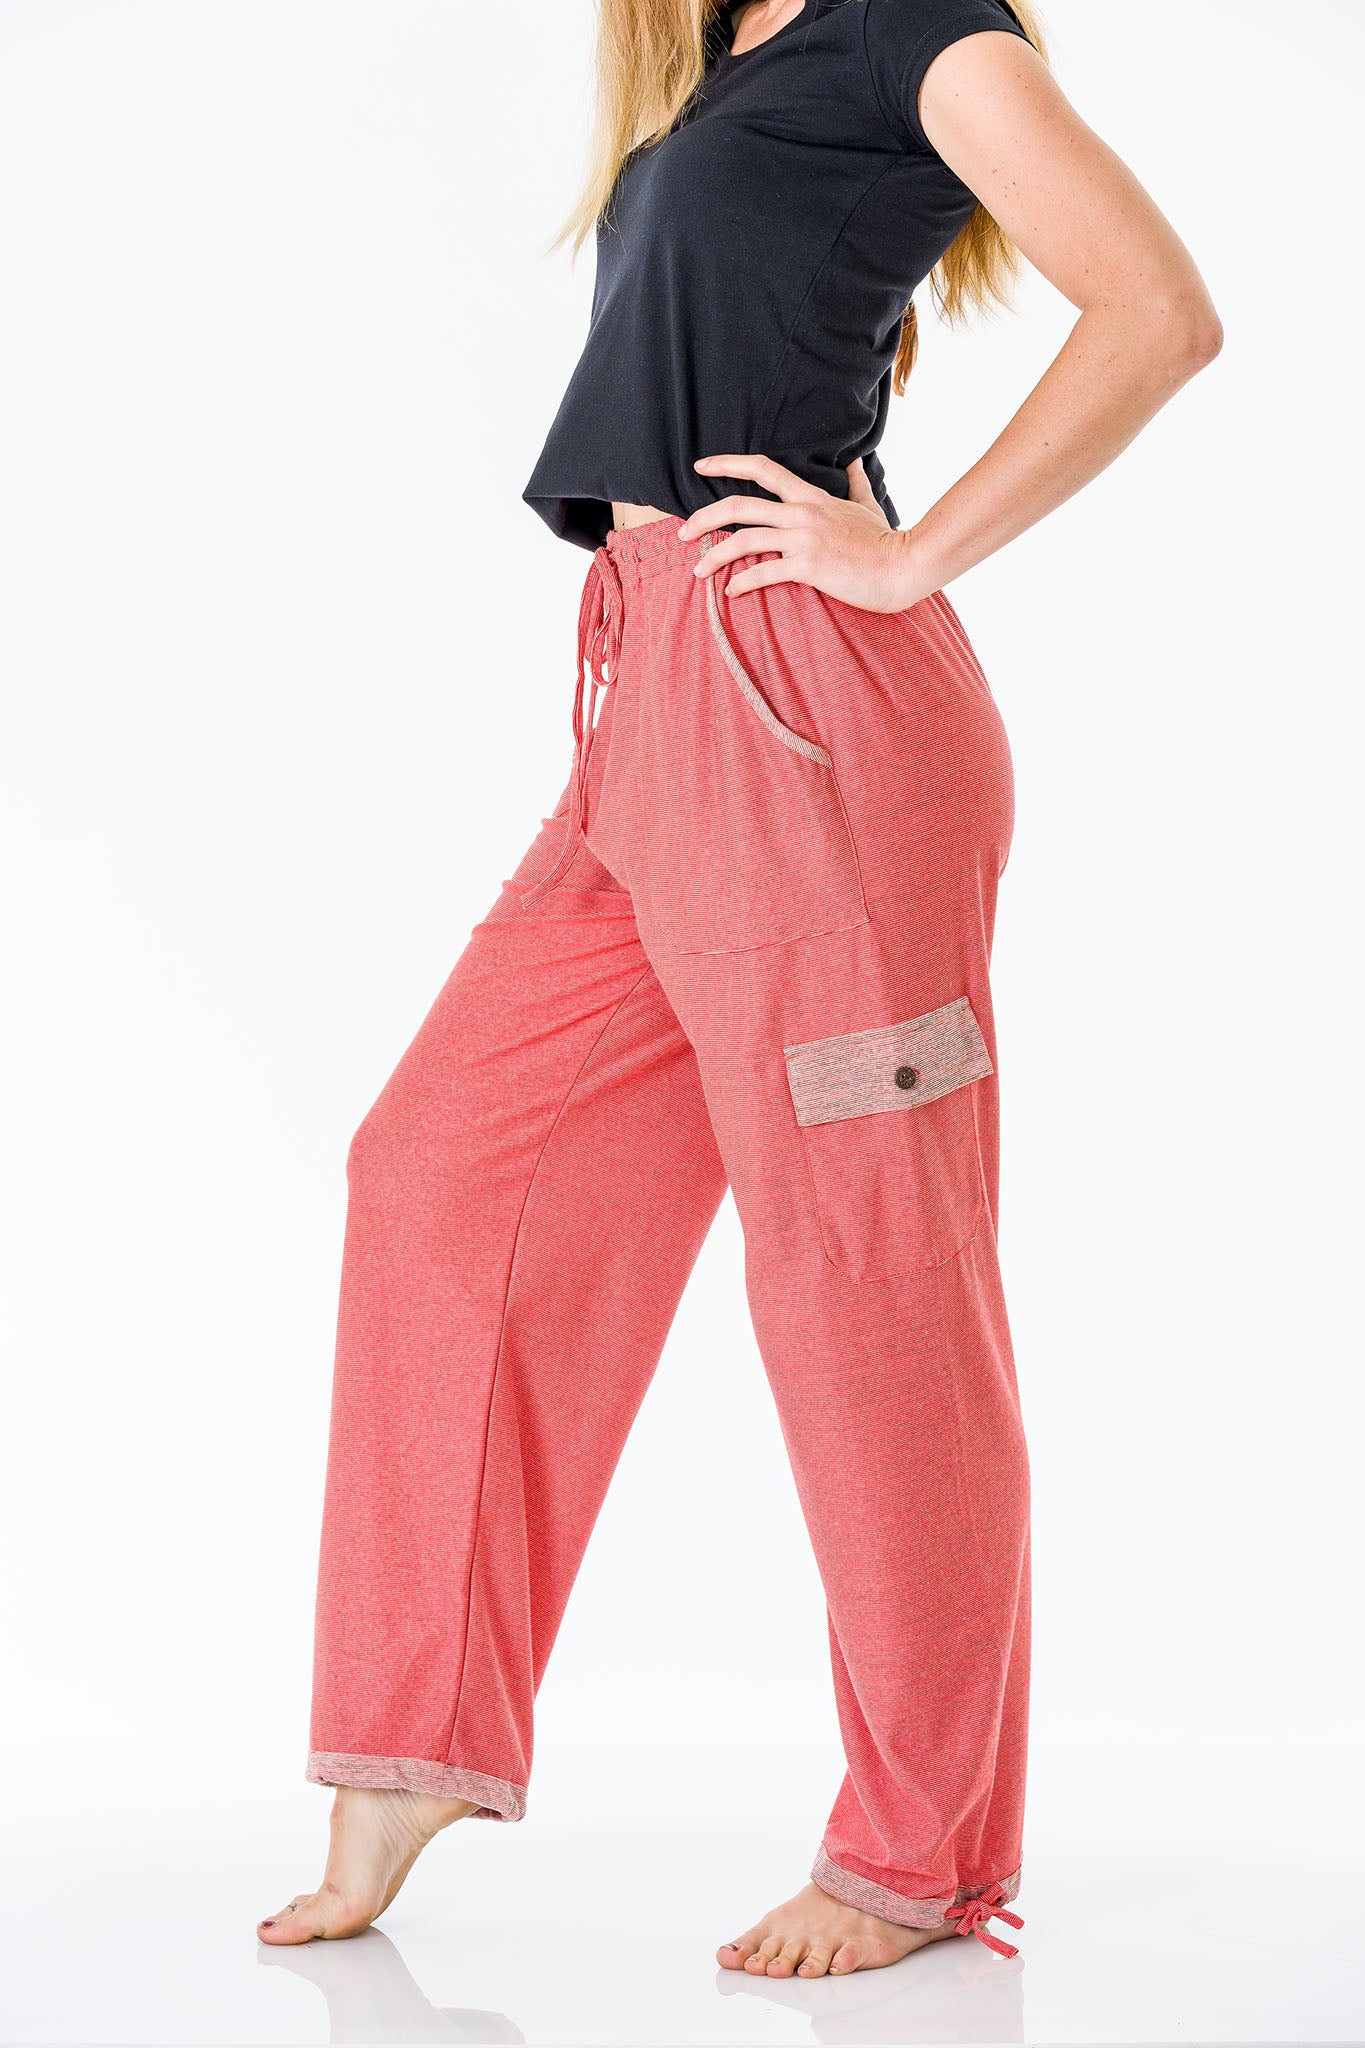 Pink coral salmon cotton pants for women